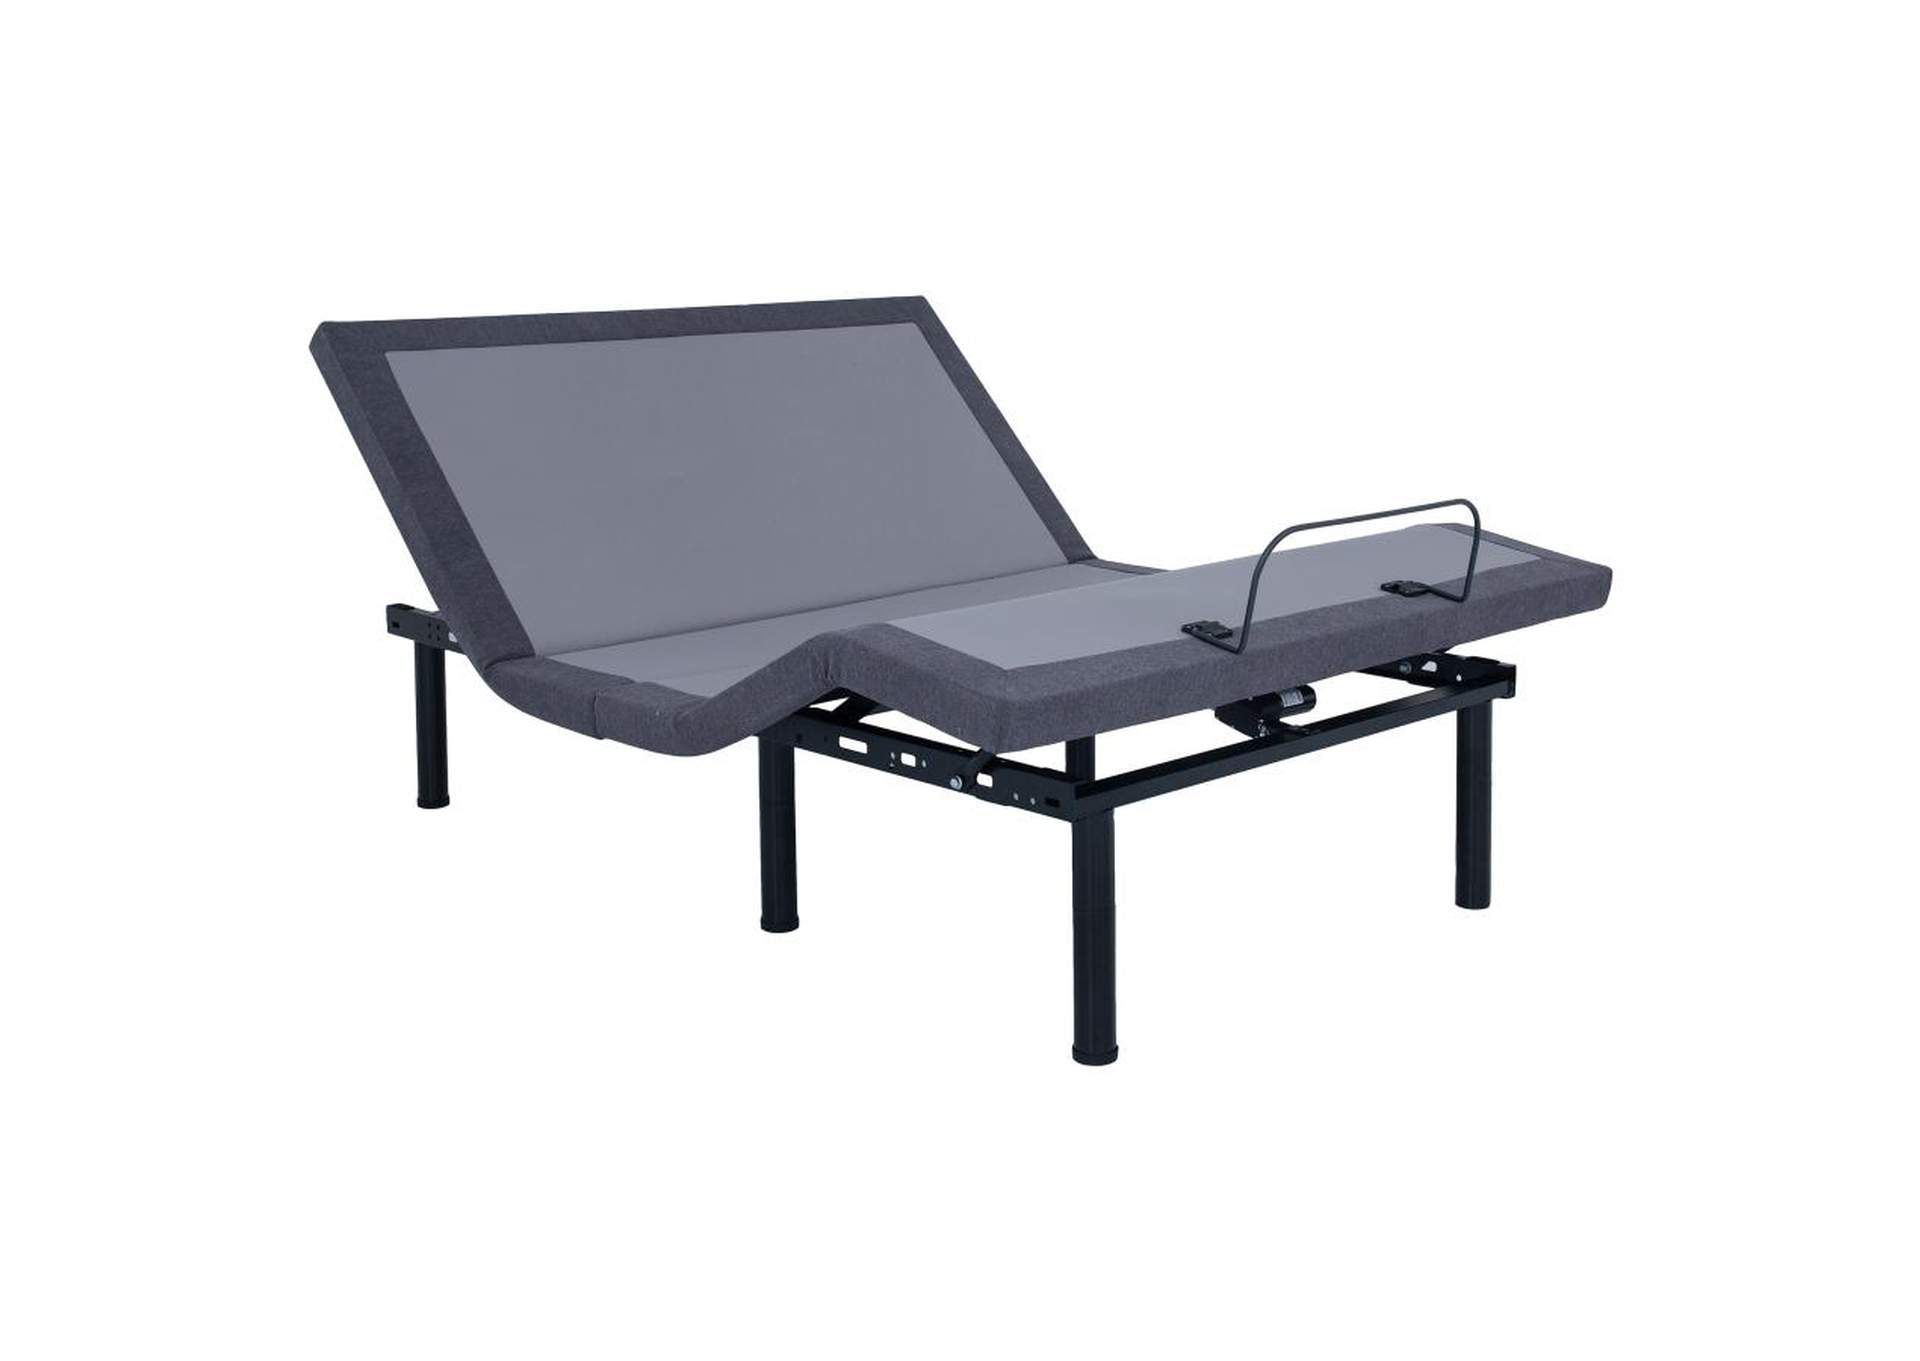 Negan Twin Xl Adjustable Bed Base Grey And Black,Coaster Furniture